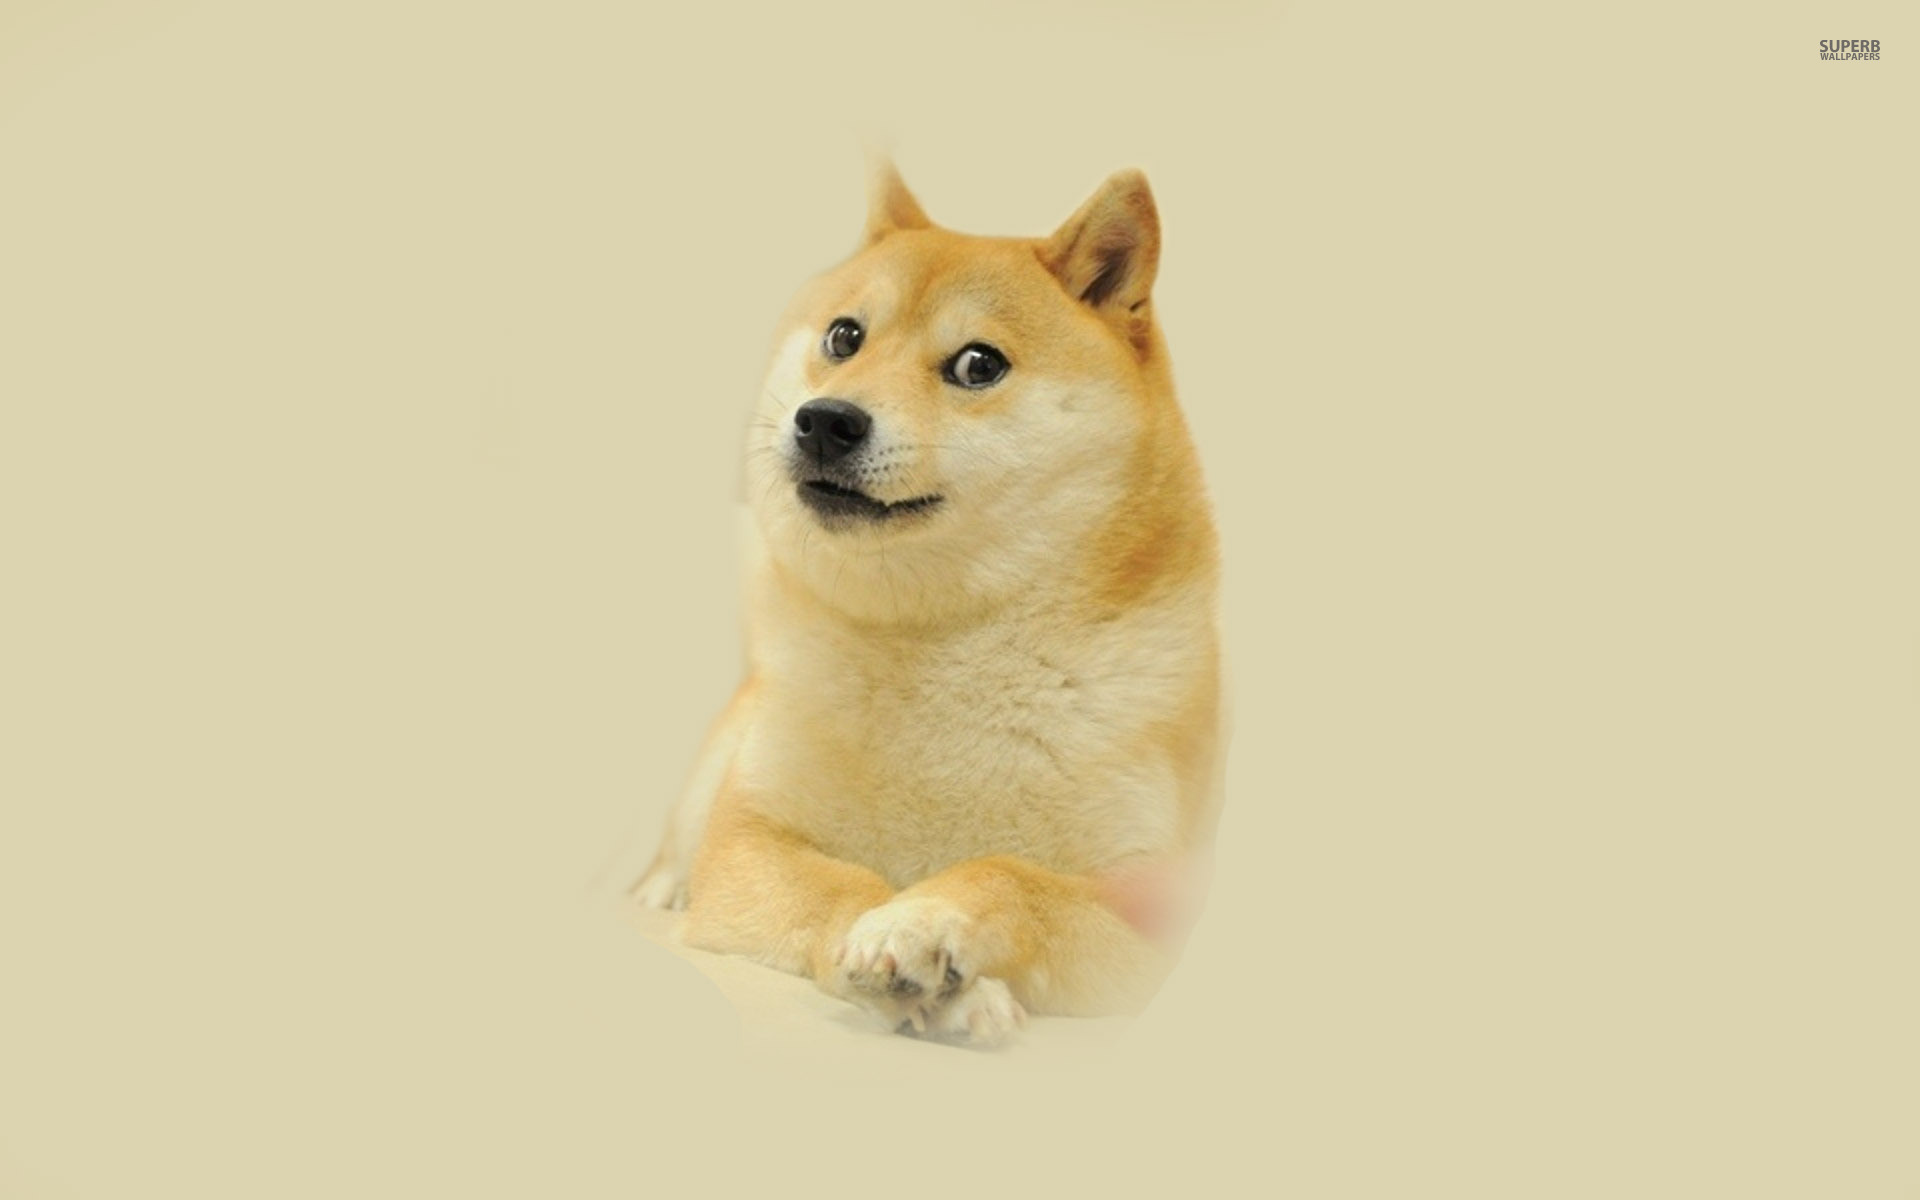 Doge Meme Iphone Wallpaper Doge meme ipho